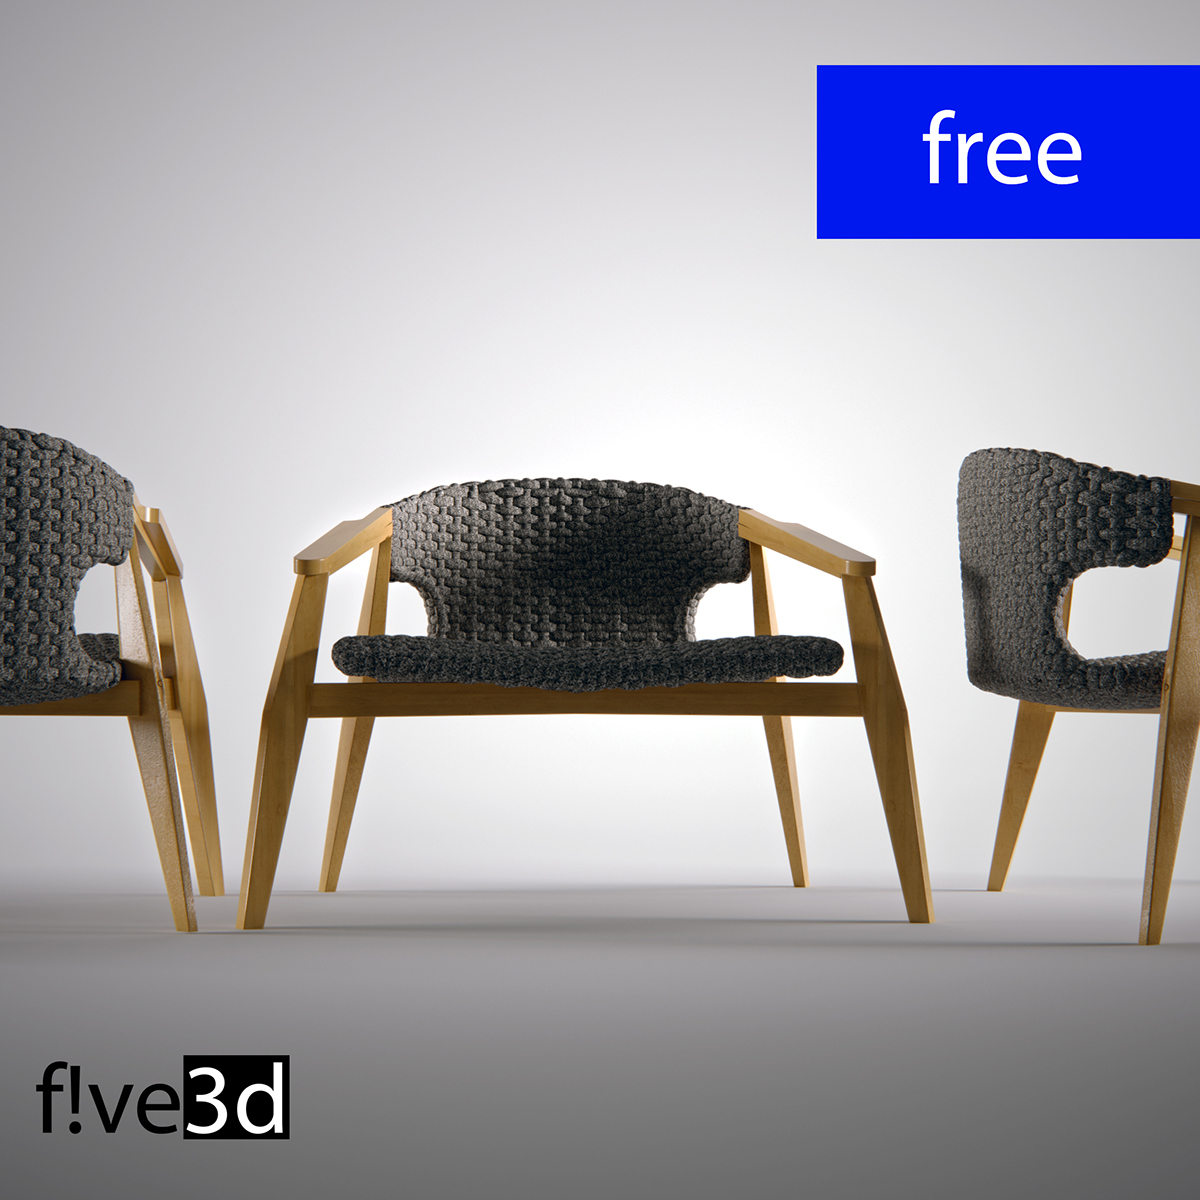 Interior armchair free download five design model forniture Render